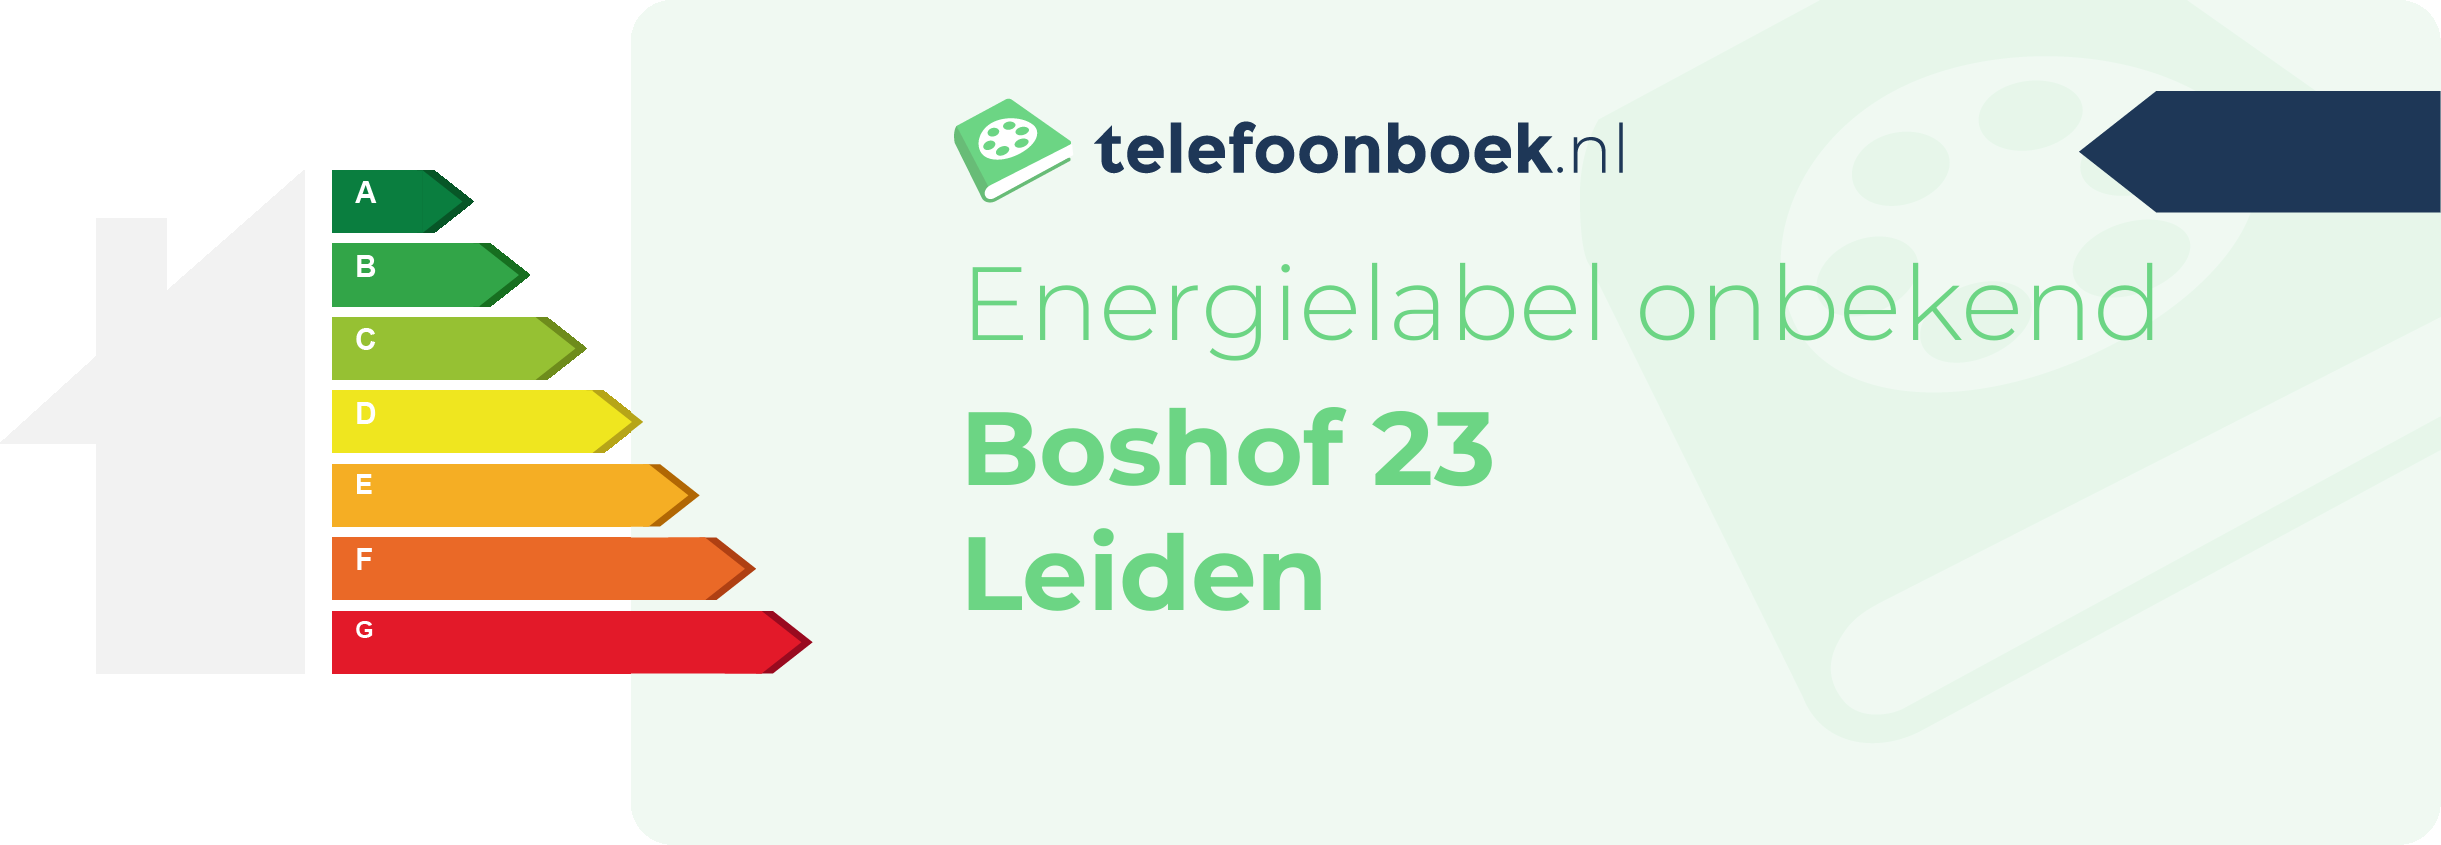 Energielabel Boshof 23 Leiden